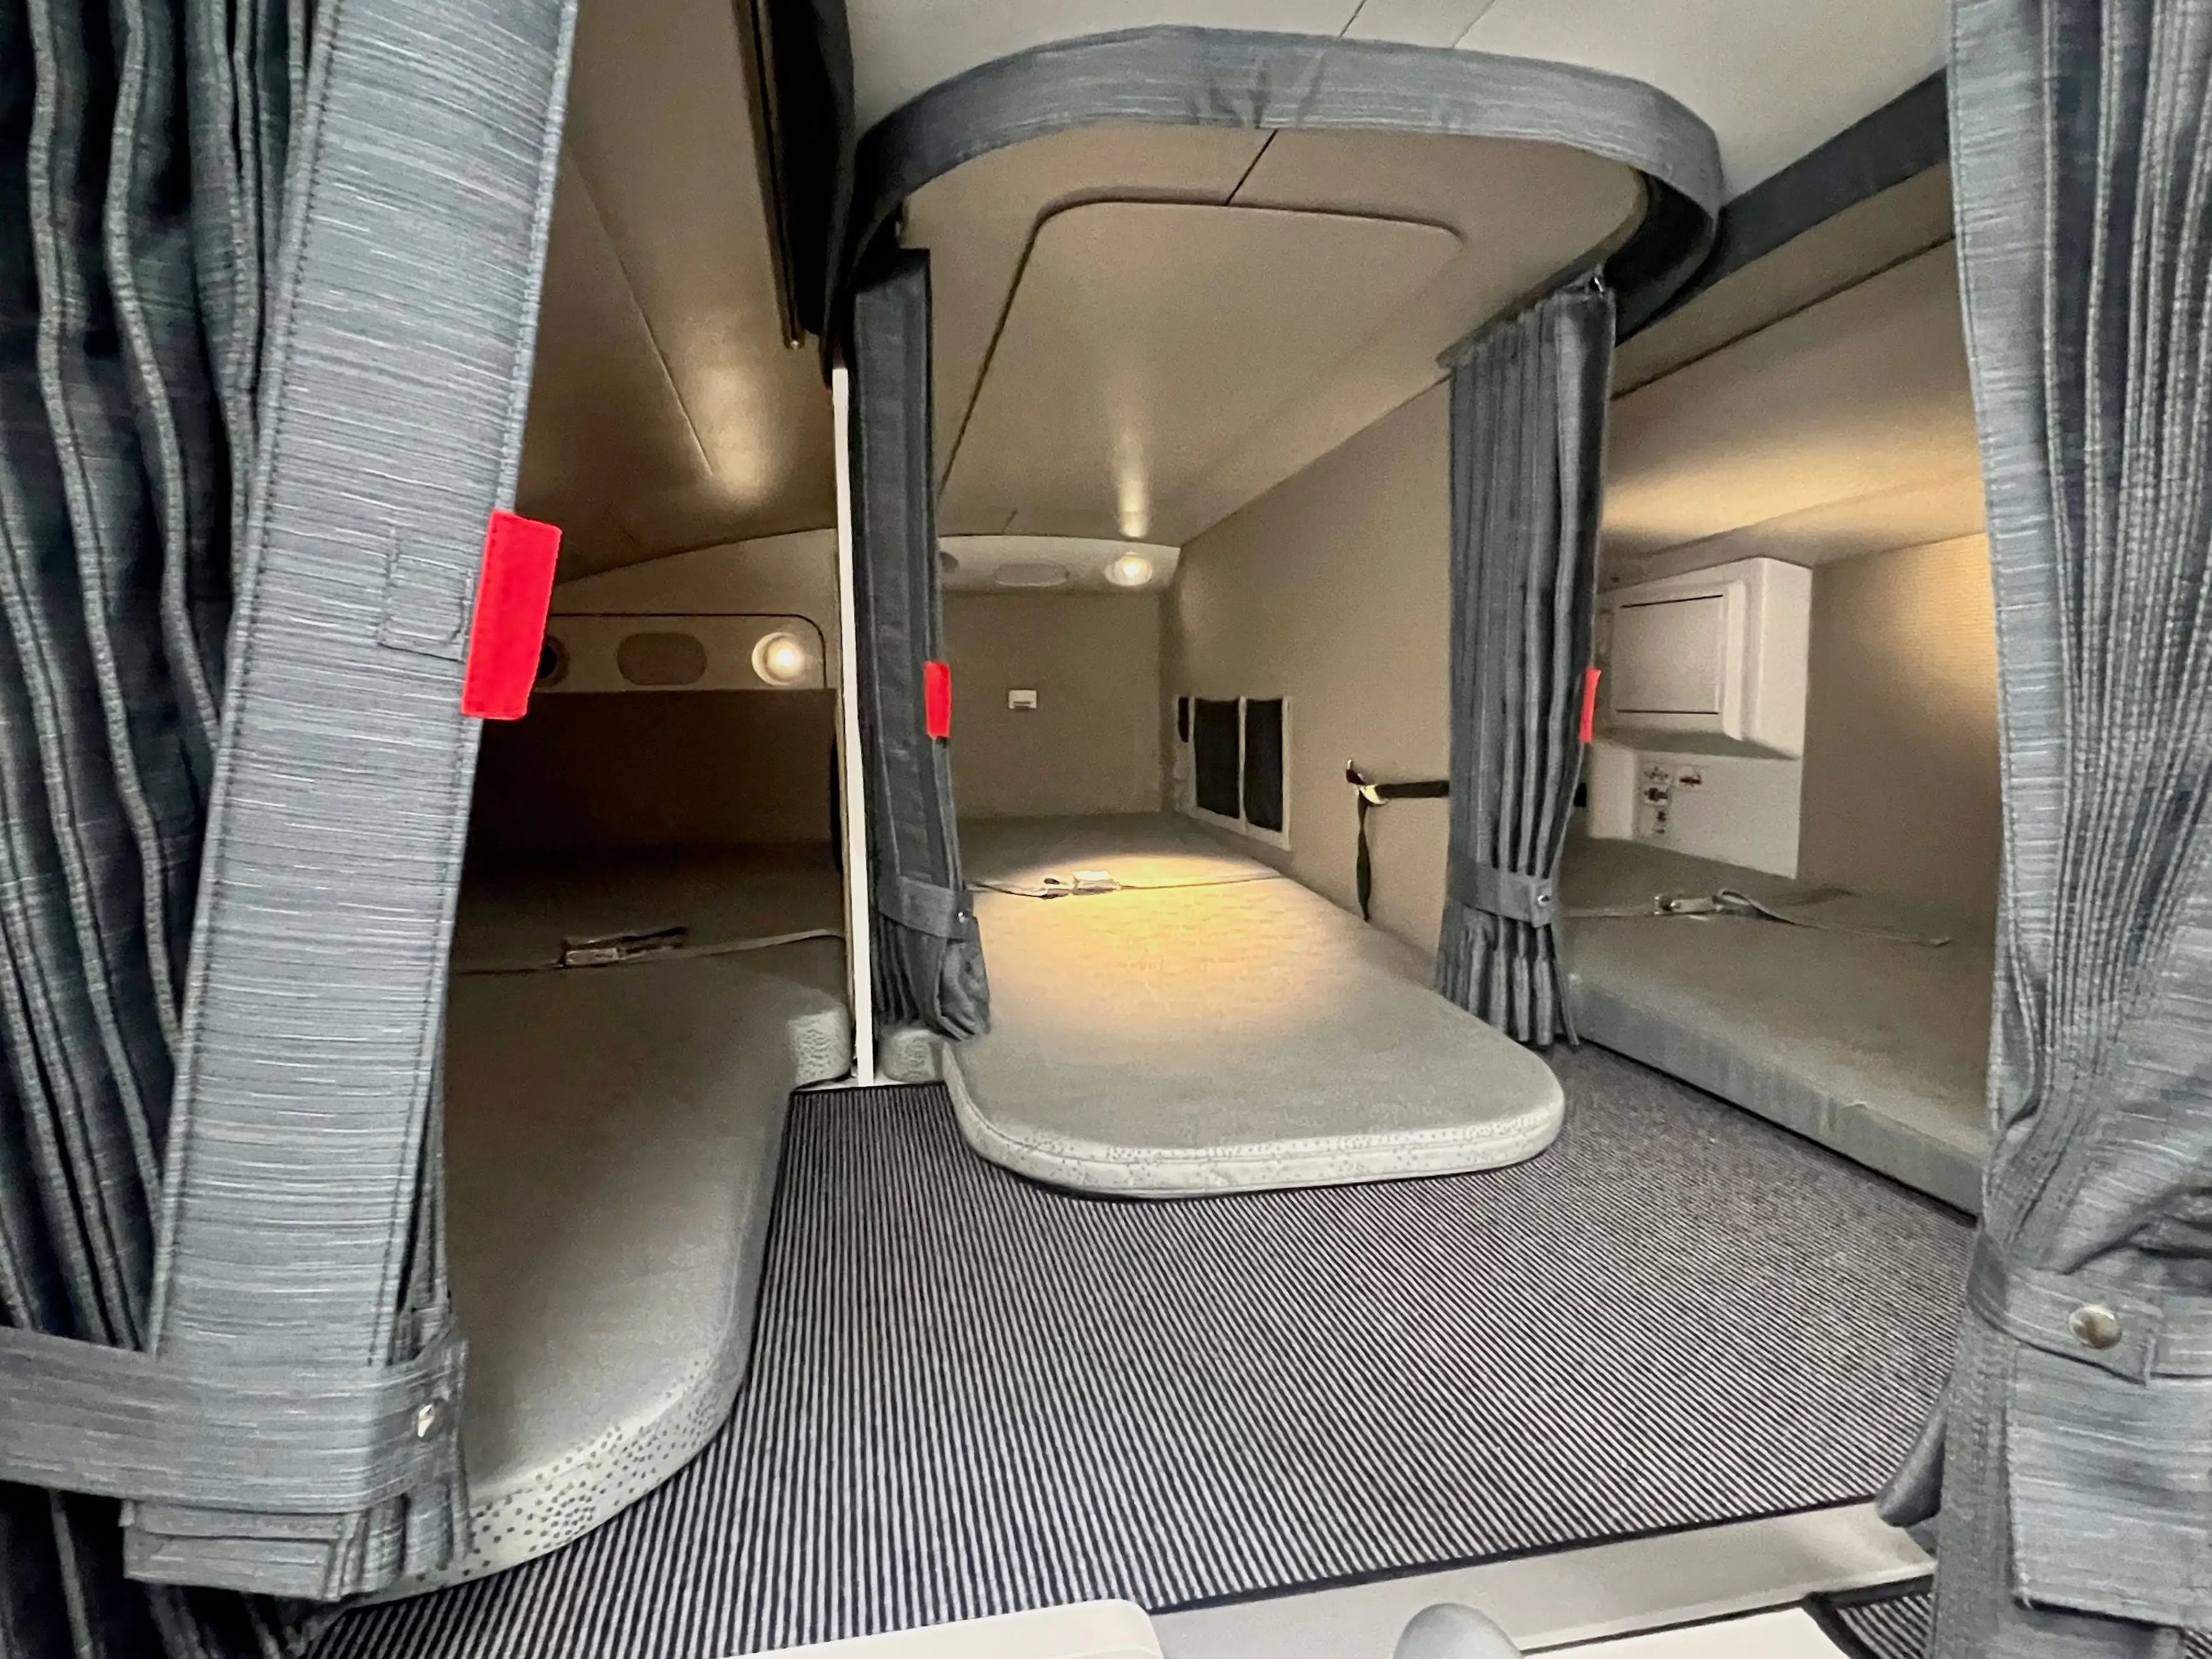 A350 flight attendant rest area.